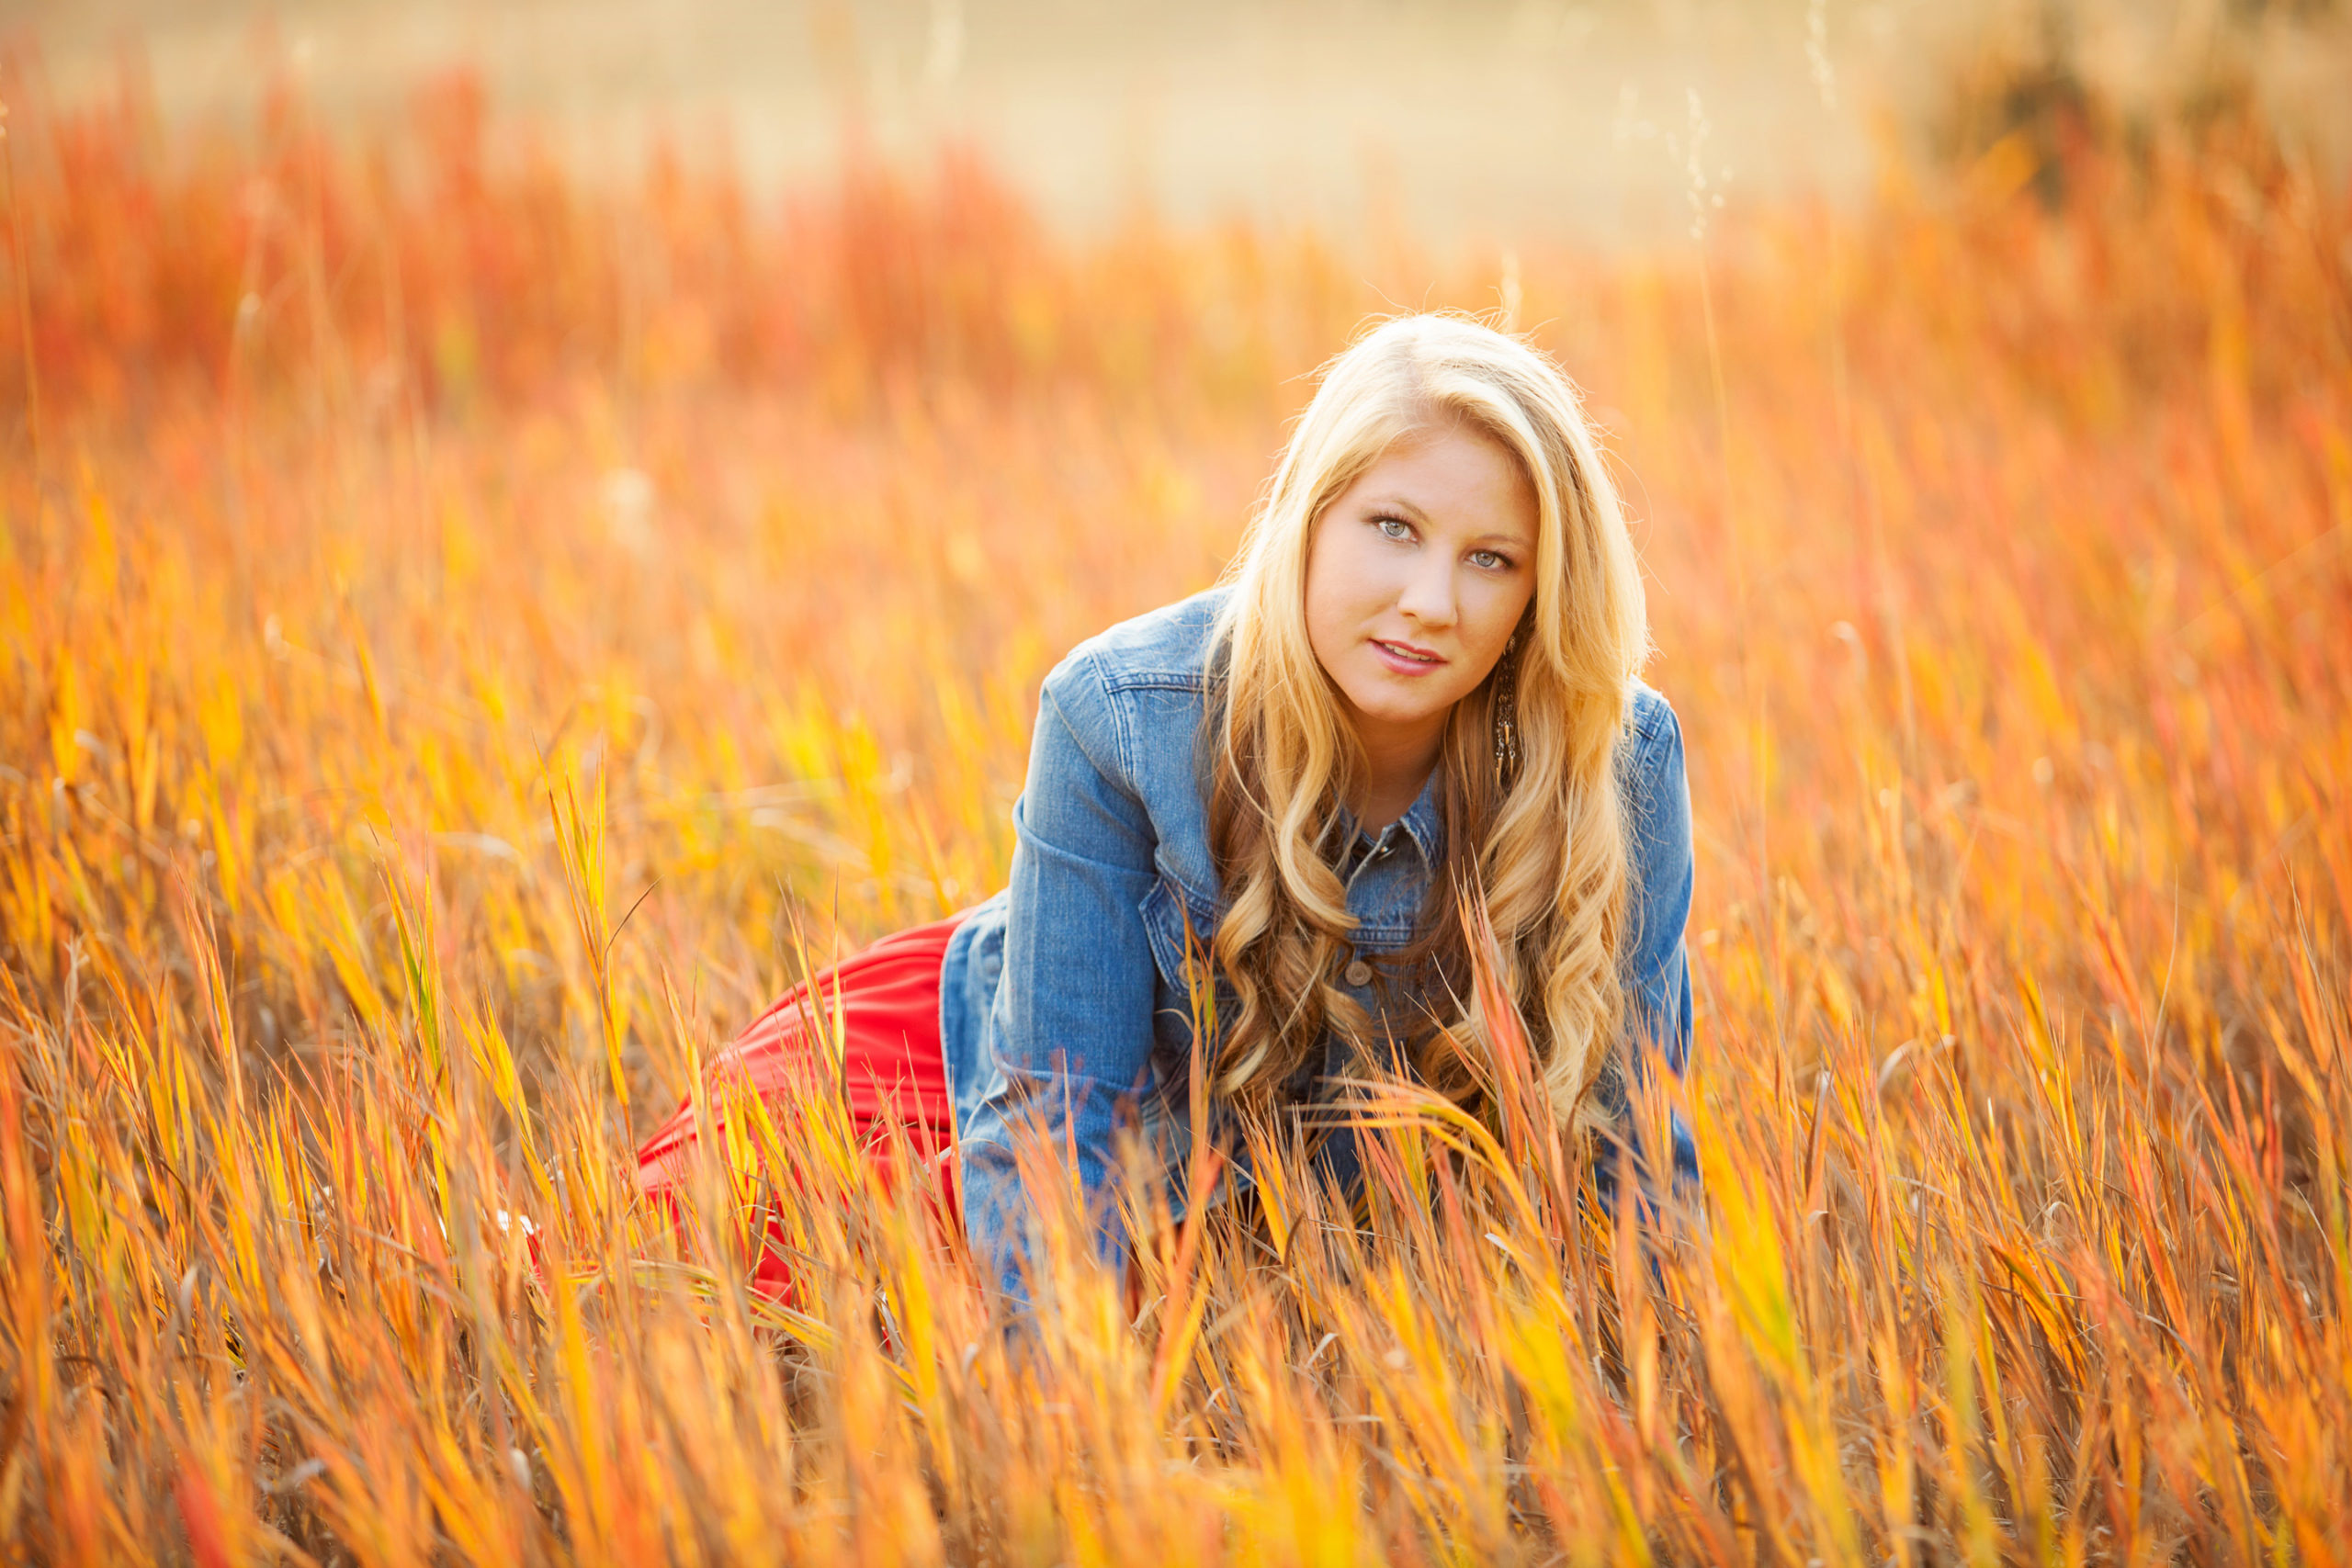 Senior portrait girl sitting in grass